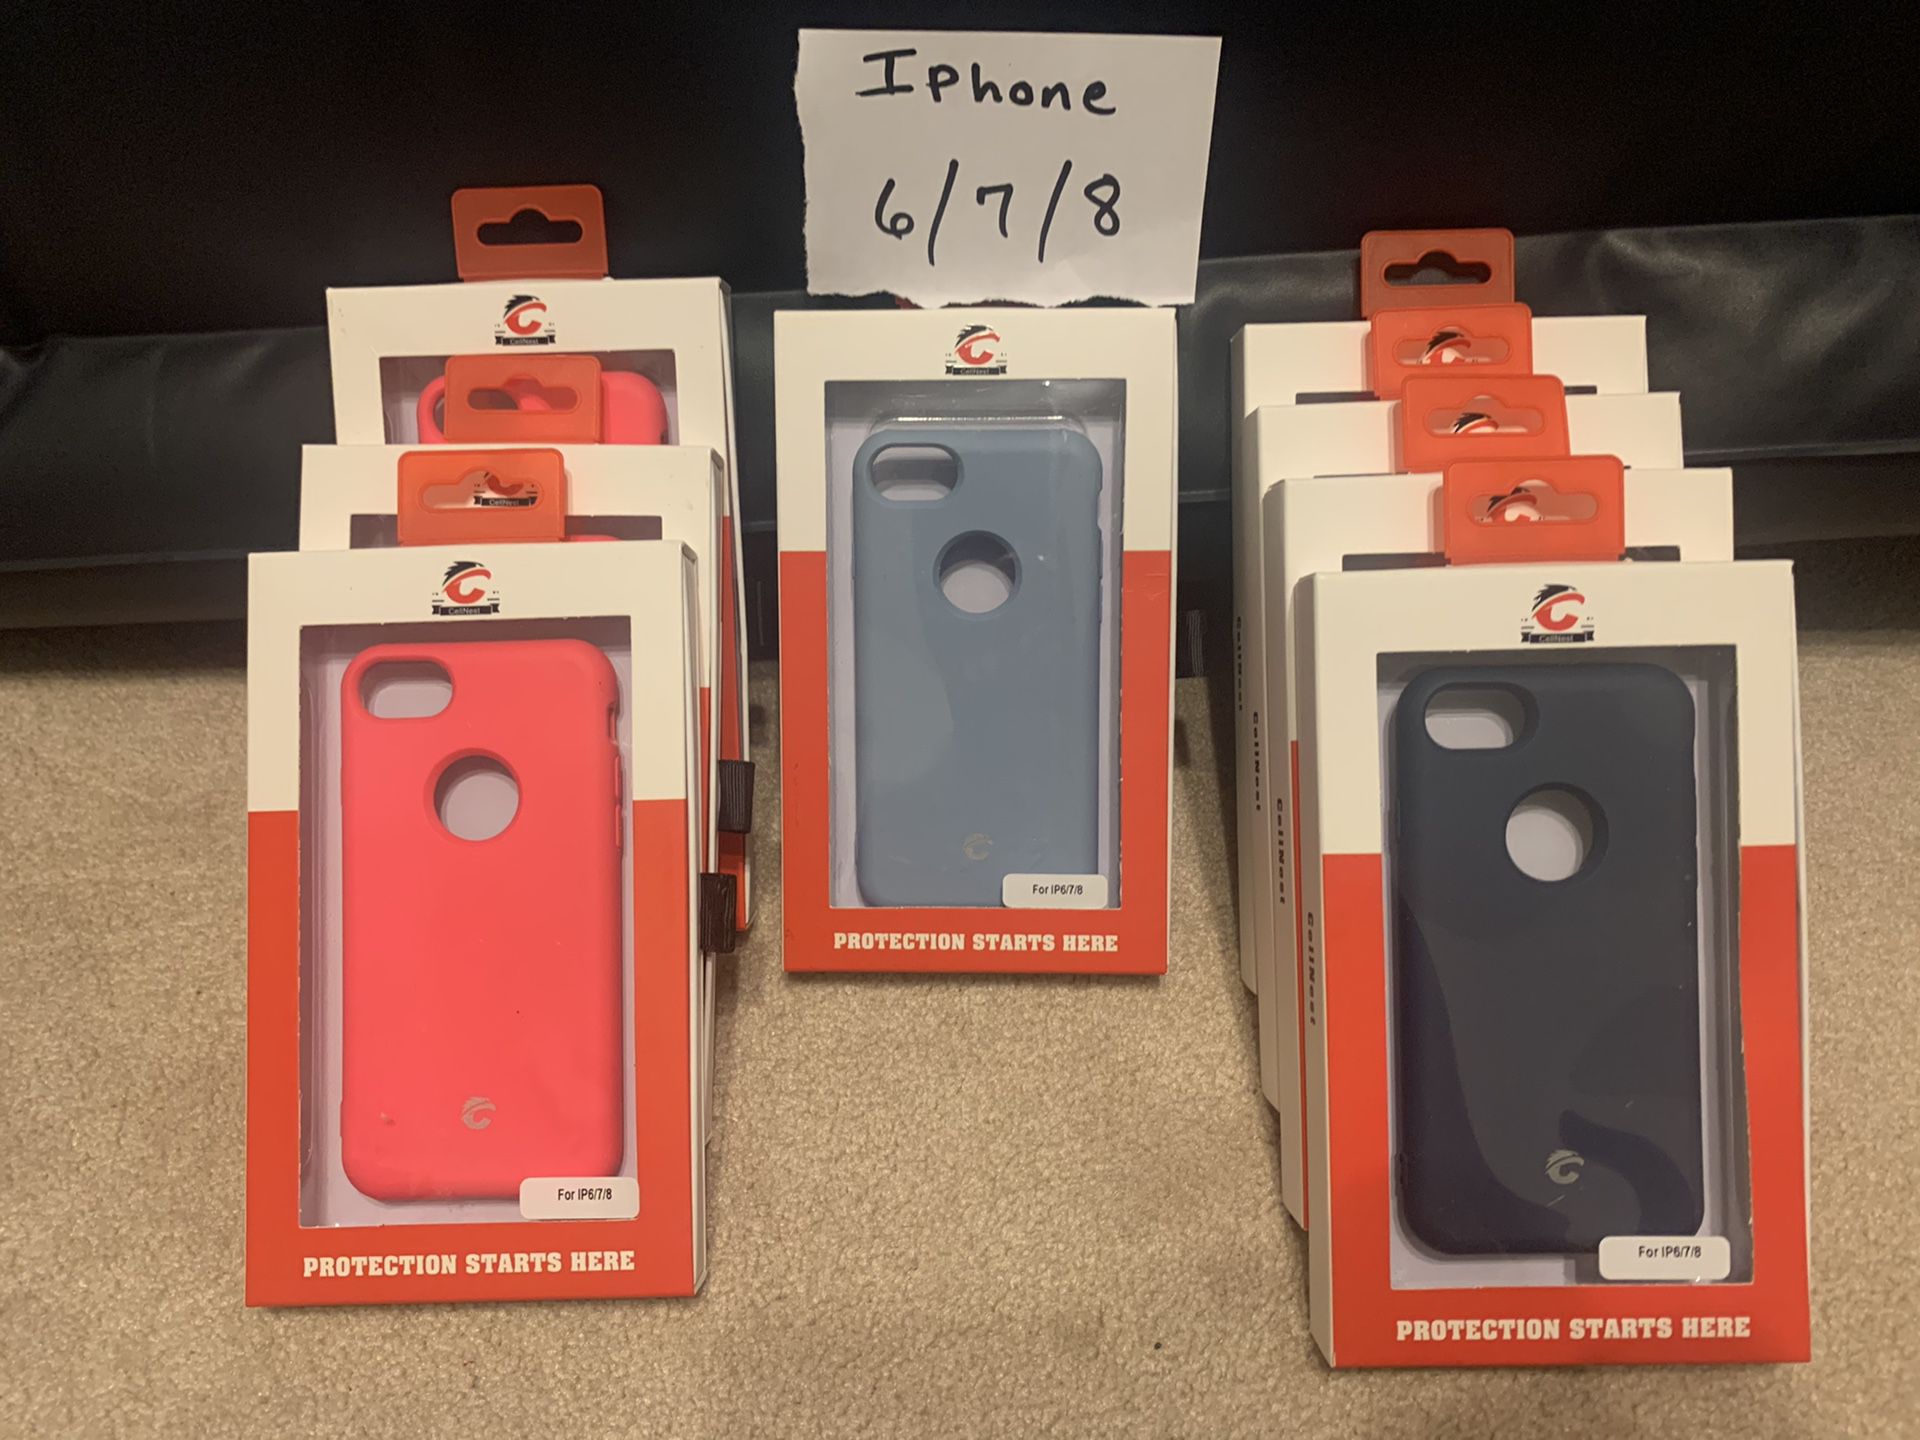 NEW iPhone 6/7/8 cases